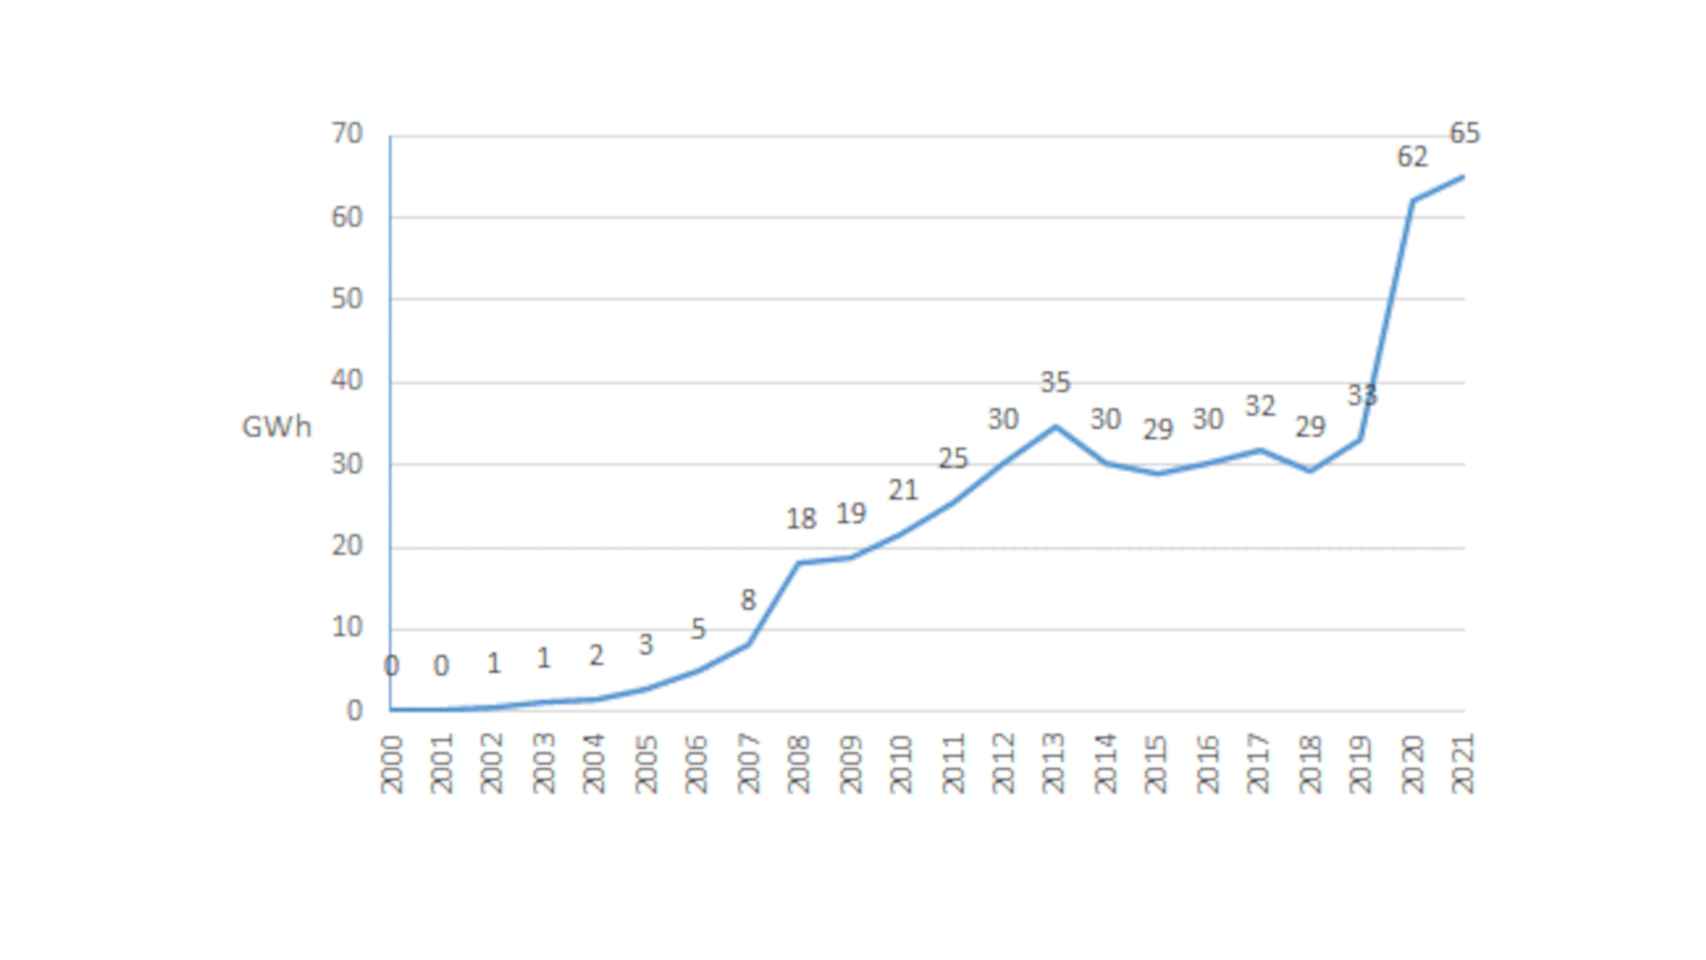 Evolución de la producción fotovoltaica eléctrica en Euskadi (GWh; 2000-2021).